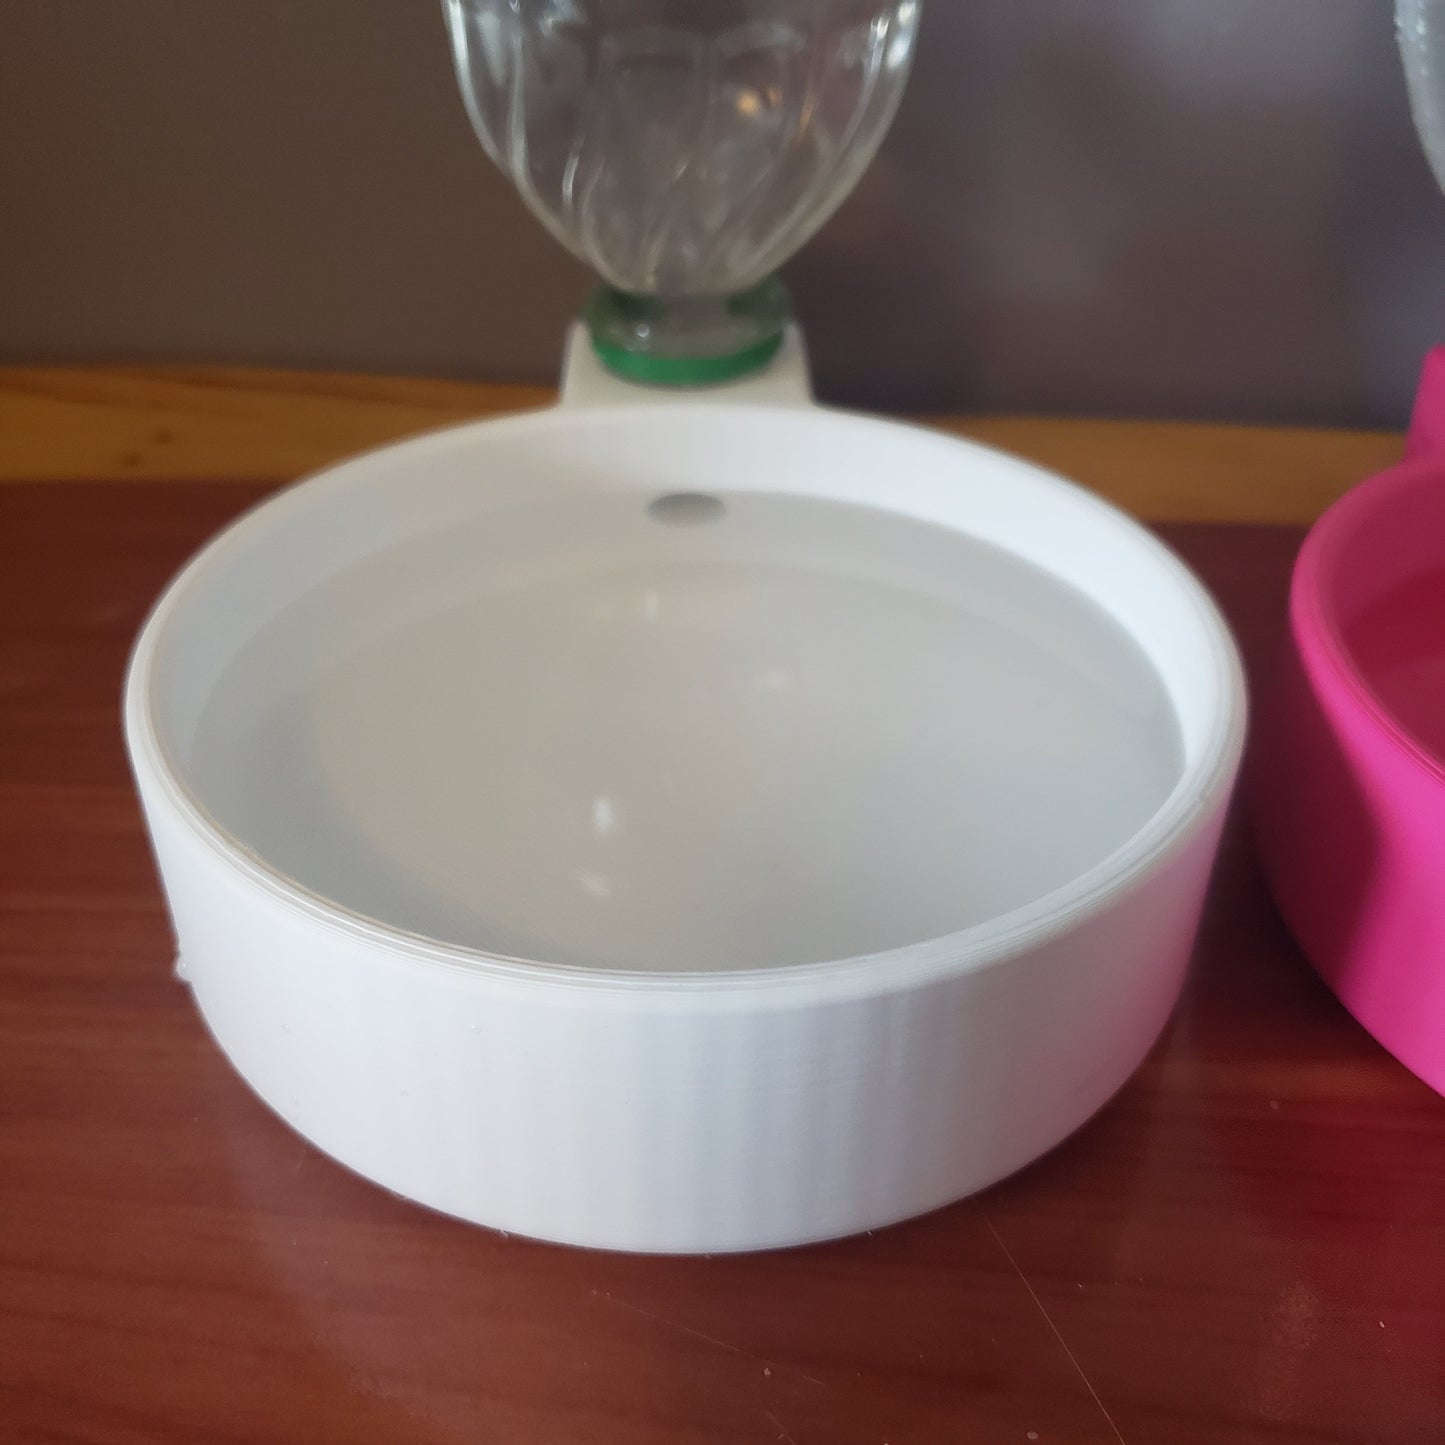 3D Printed Gravity Pet Water Bowl Waterer - Pet Travel Accessory